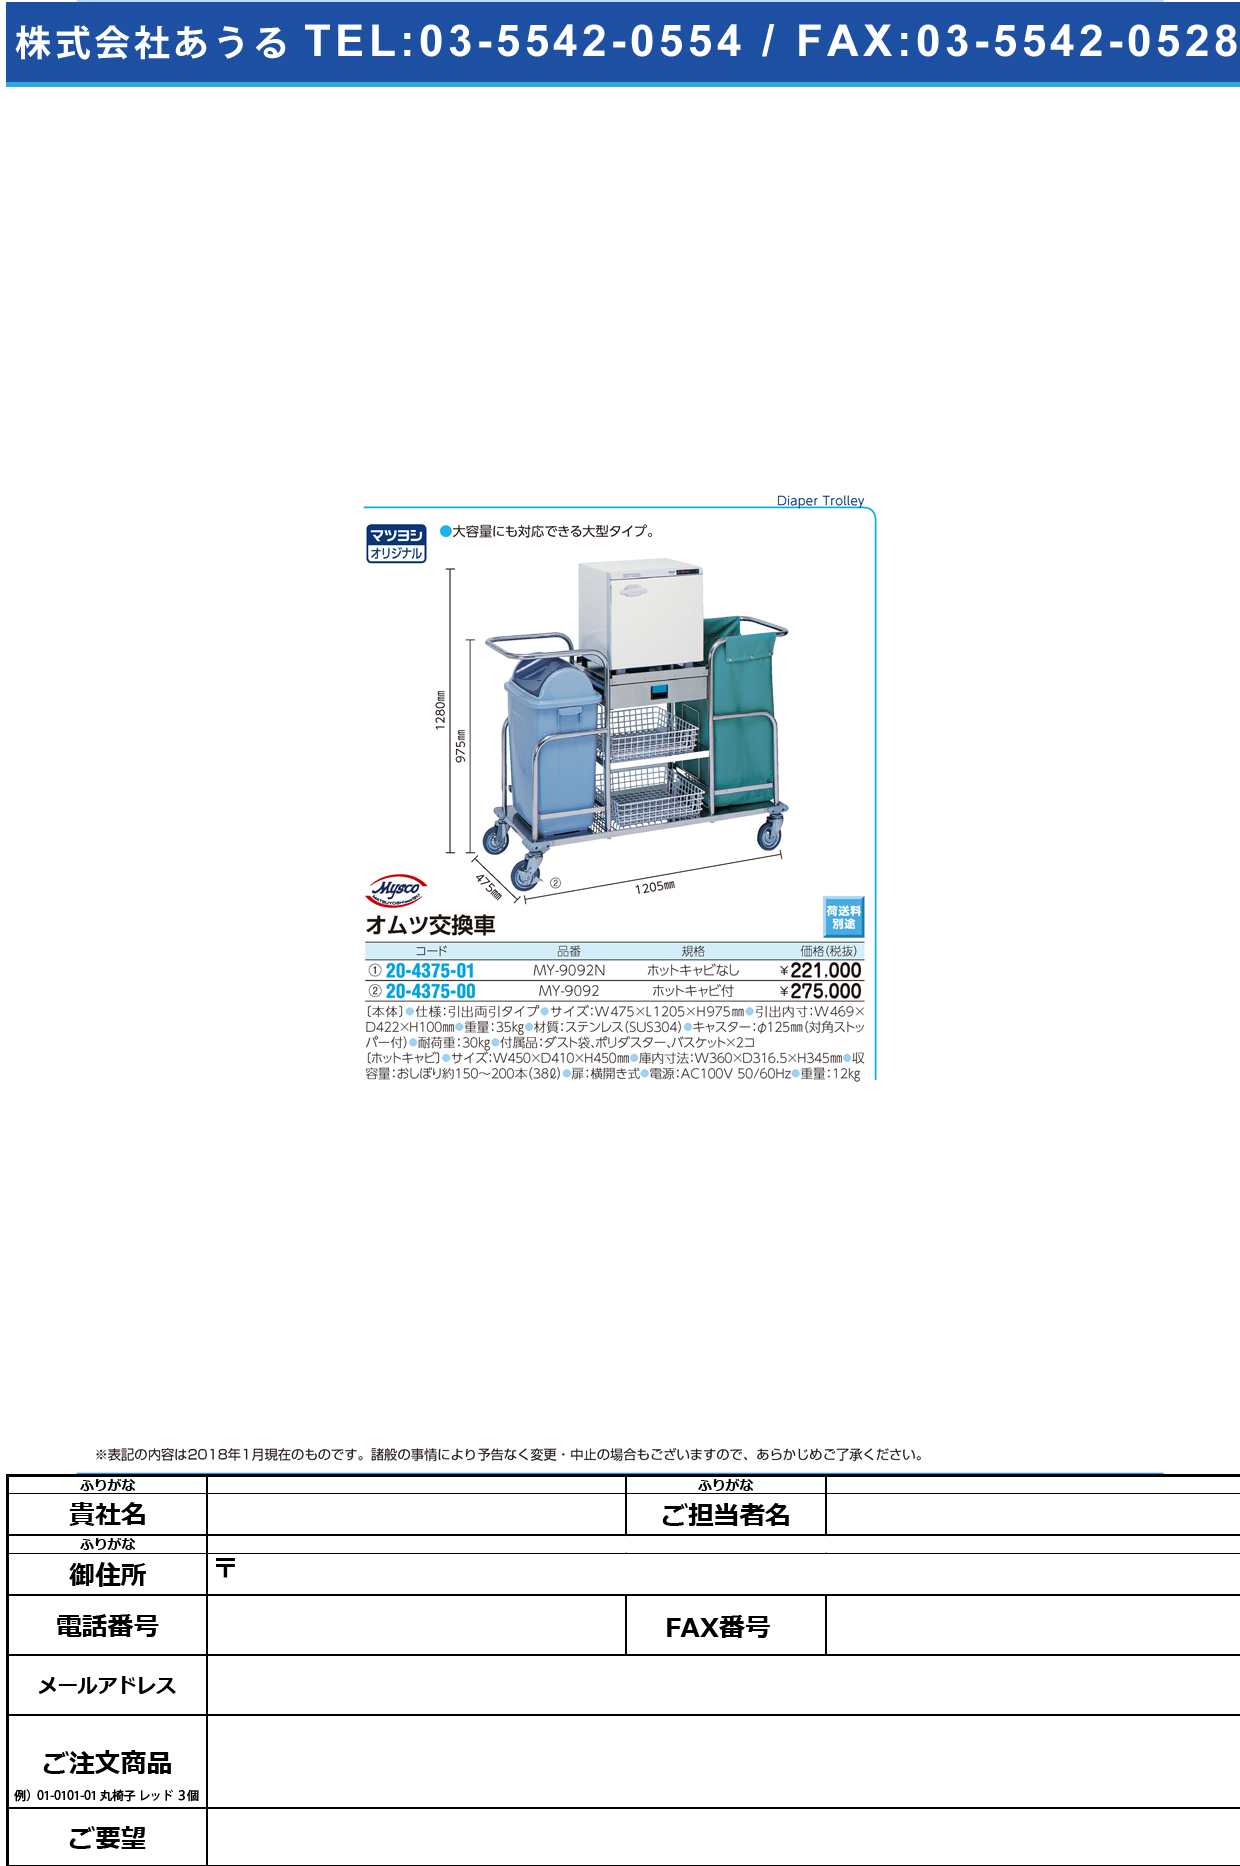 (20-4375-00)オムツ交換車 MY-9092(ﾎｯﾄｷｬﾋﾞﾂｷ) ｵﾑﾂｺｳｶﾝｼｬ【1台単位】【2019年カタログ商品】